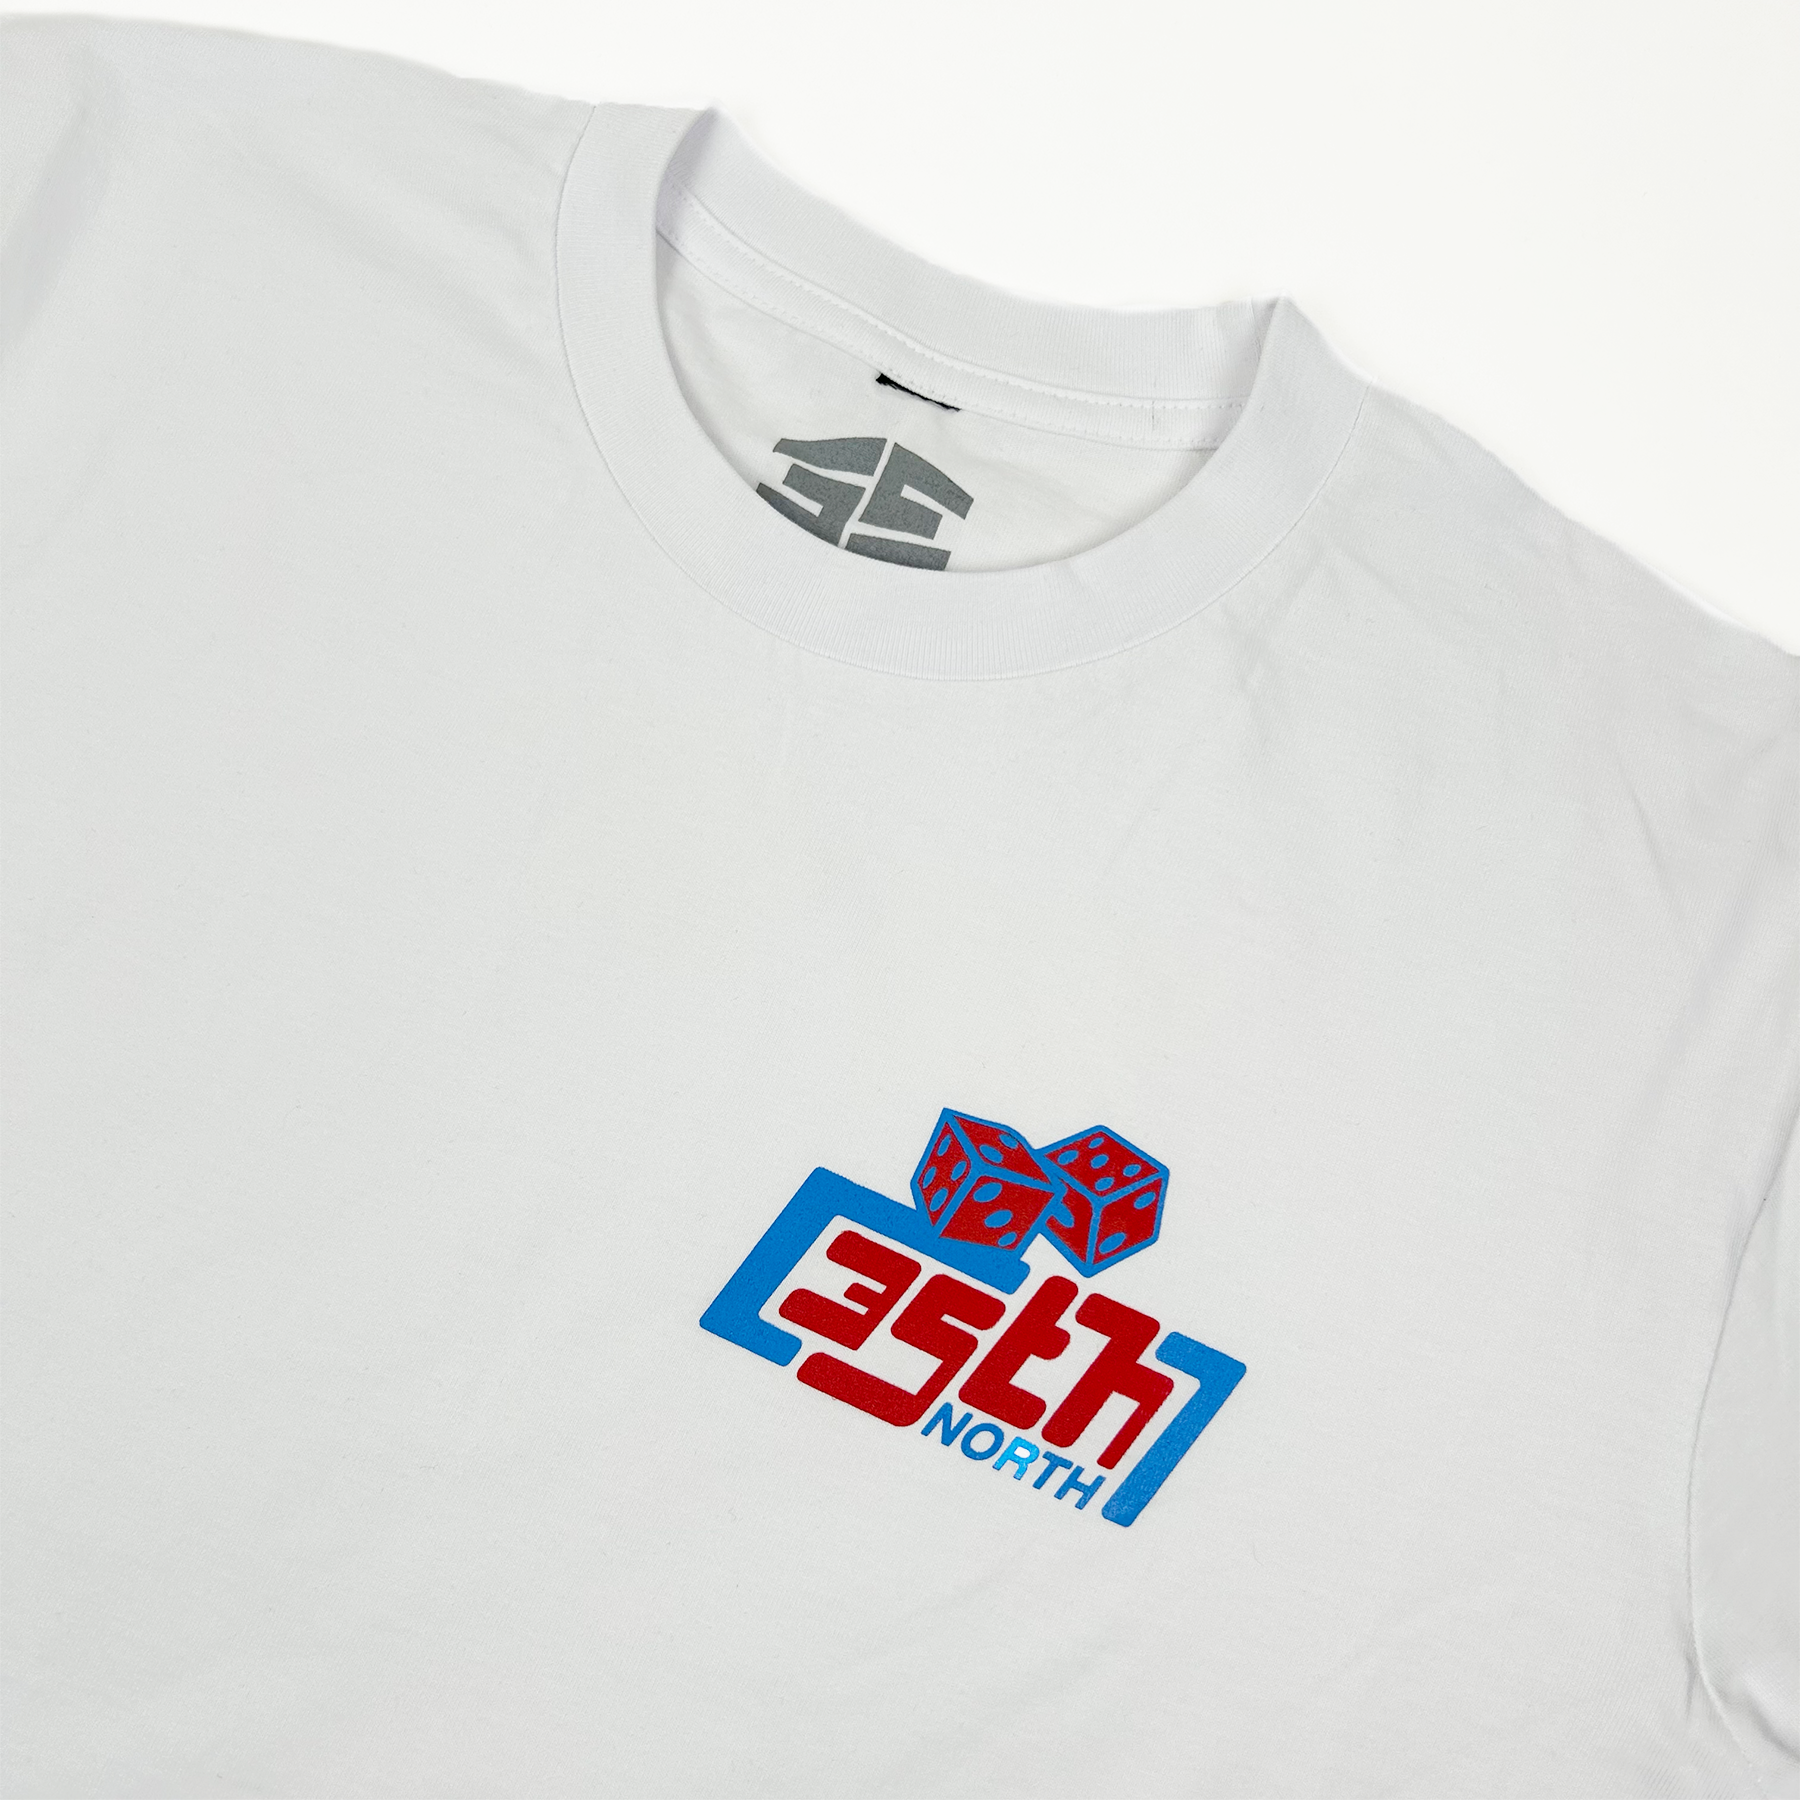 35th North "Sam Dice" T-Shirt - White